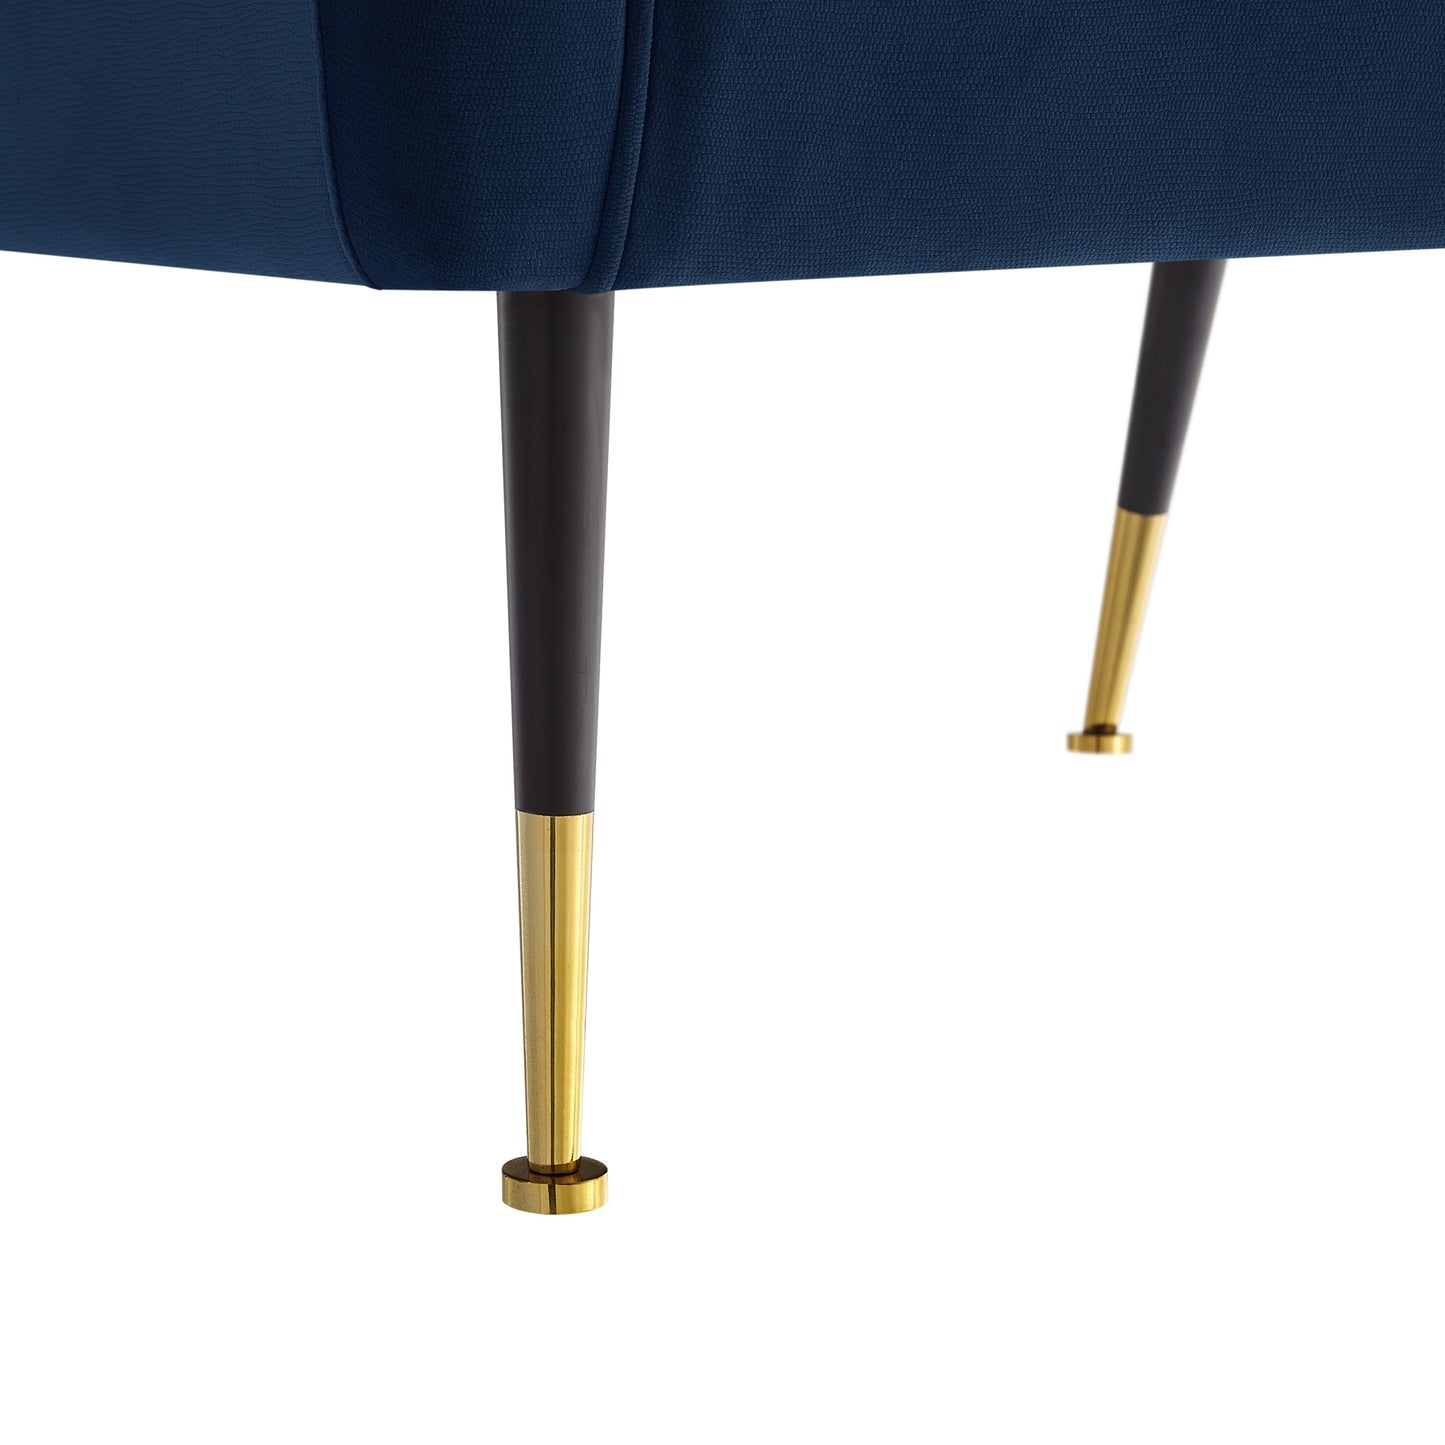 32" Navy Blue And Gold Velvet Arm Chair